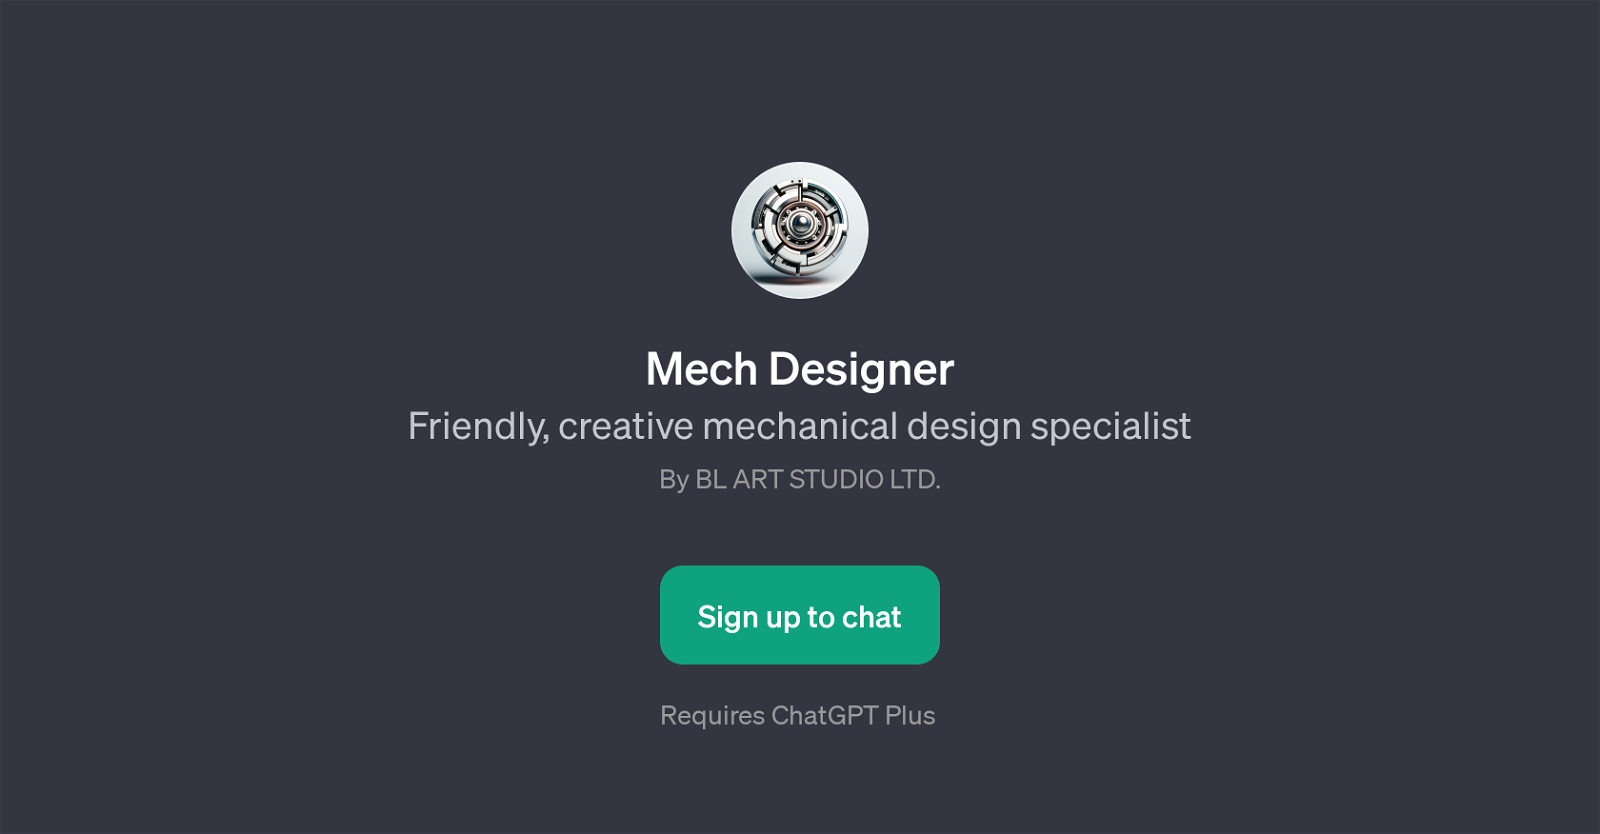 Mech Designer website